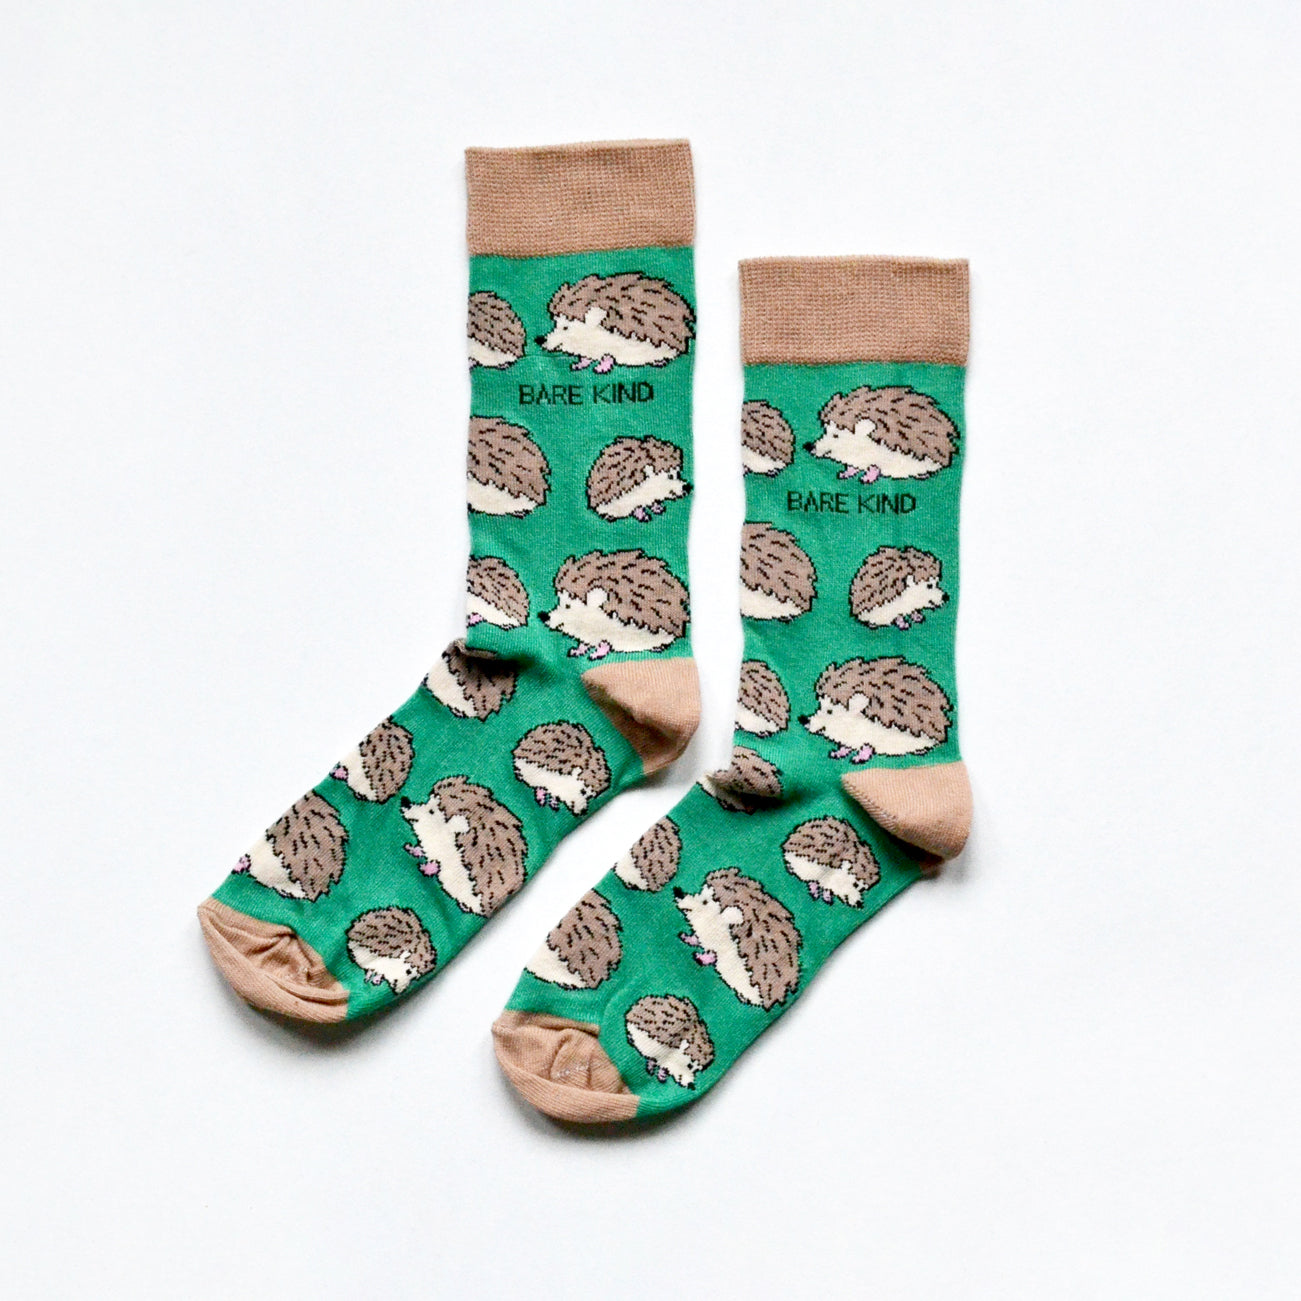 Bare Kind Bamboo Socks - Save the Hedgehog (brown)